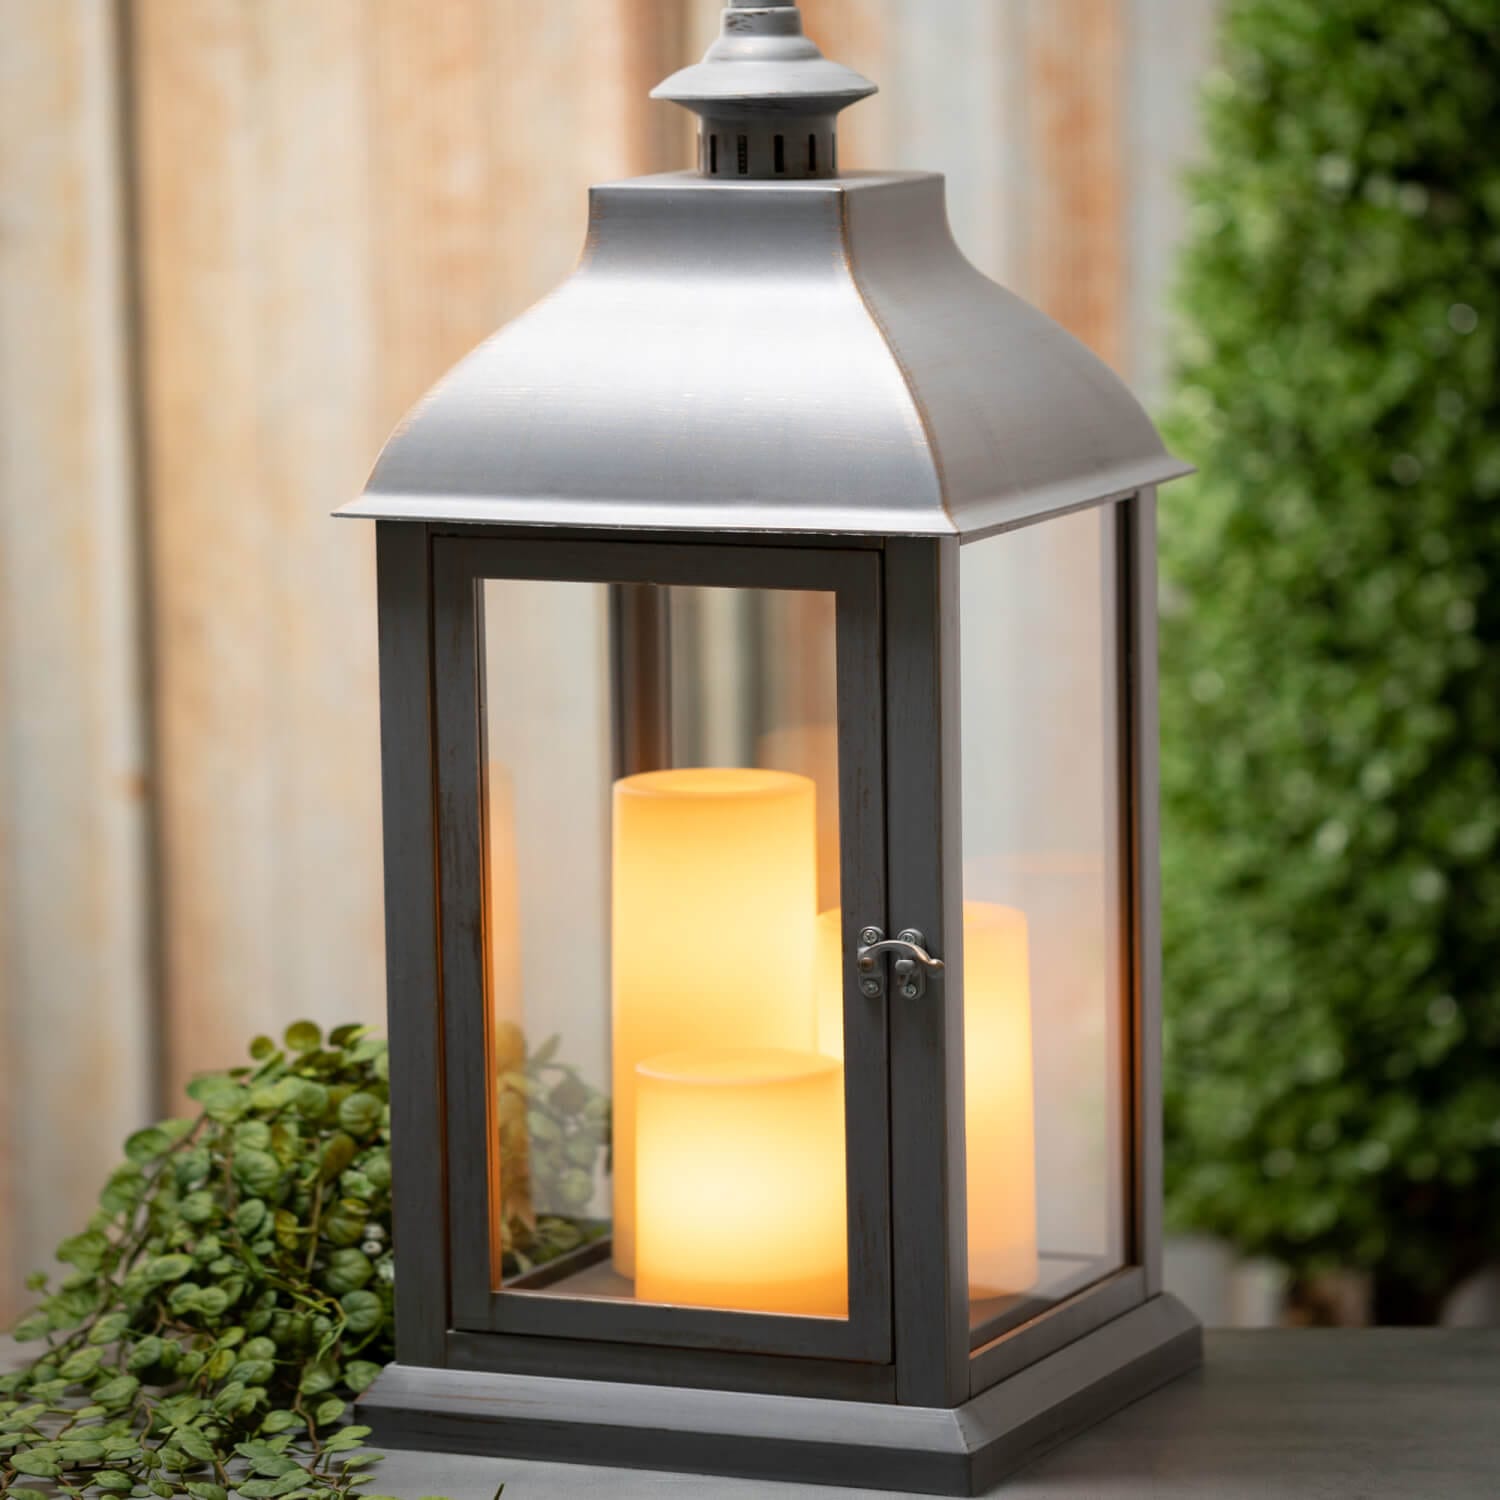 Large Lantern With 3 LED Pillars Elevate Home Decor - Lanterns